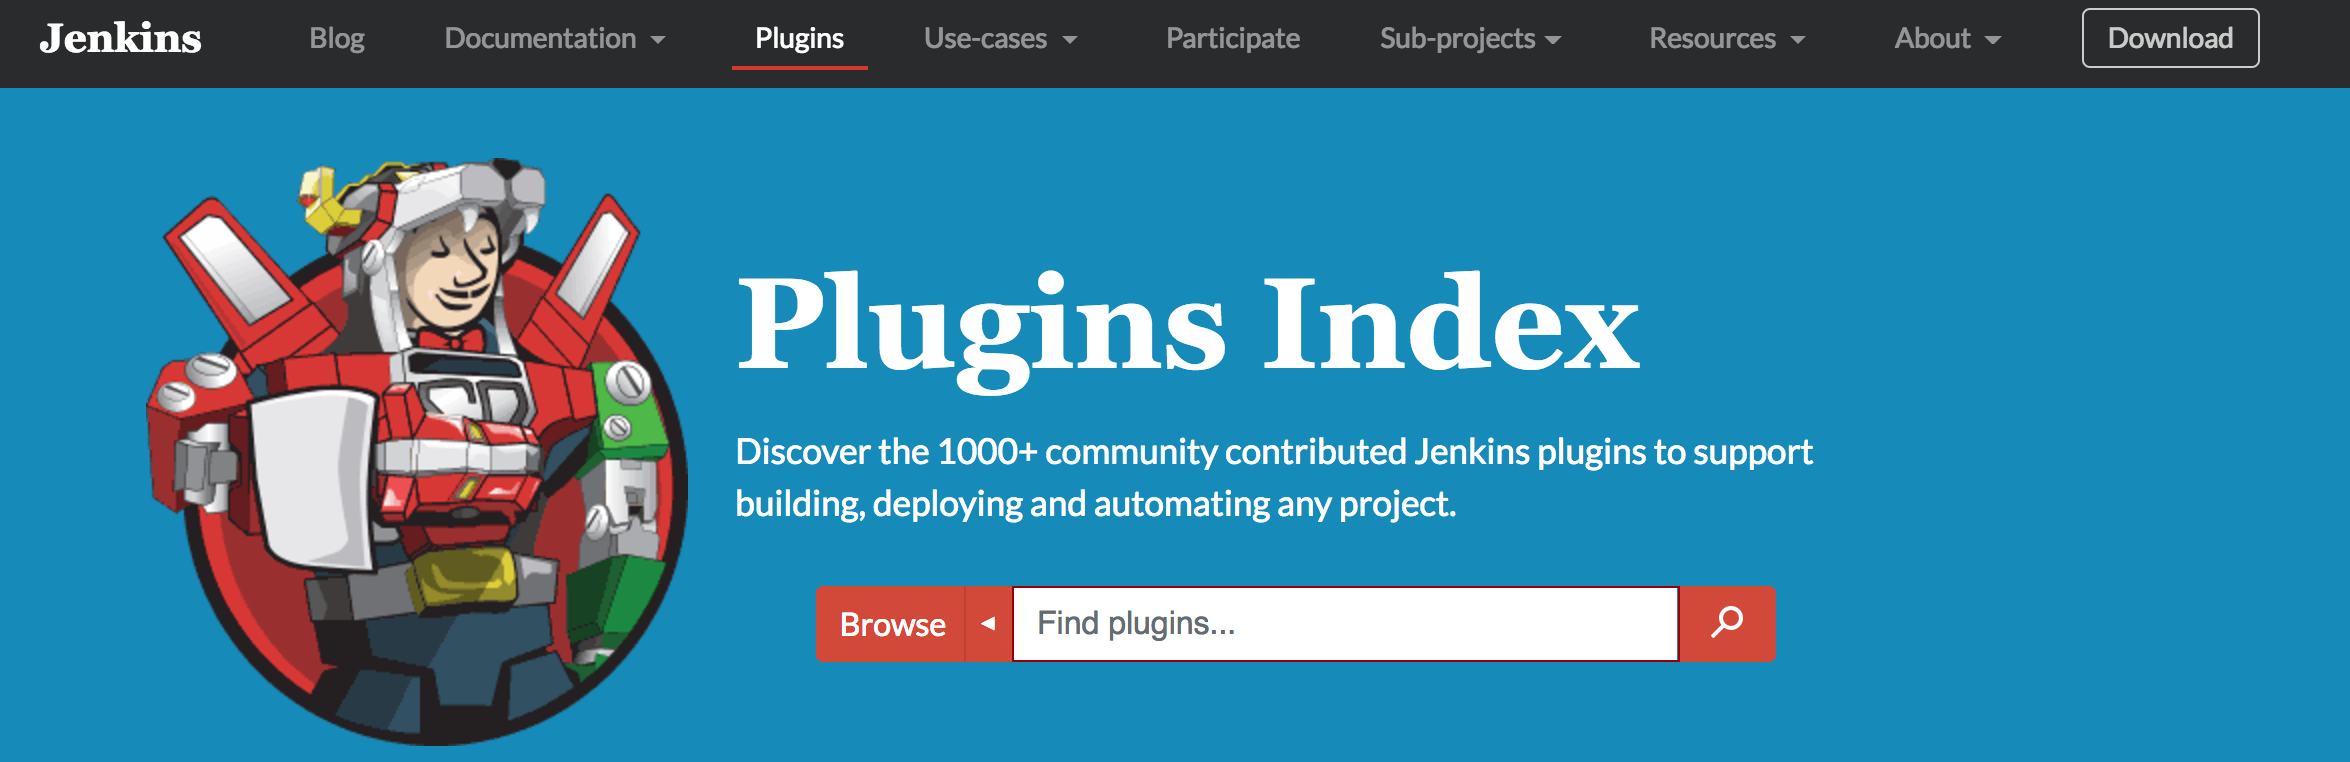 Jenkins Plugins